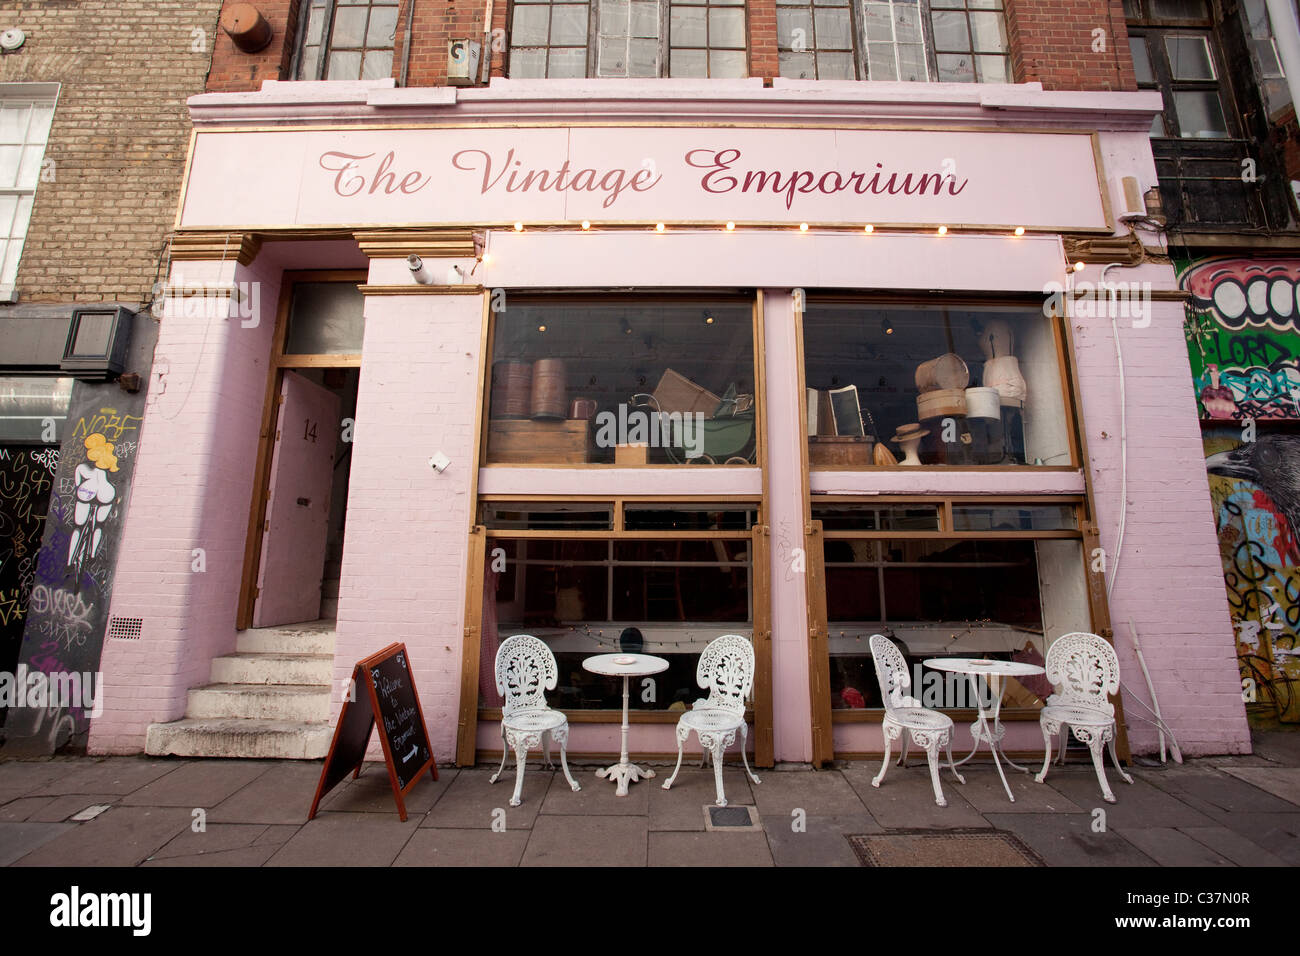 The Vintage Emporium on Bacon Street, Brick lane, London. Photo:Jeff Gilbert Stock Photo